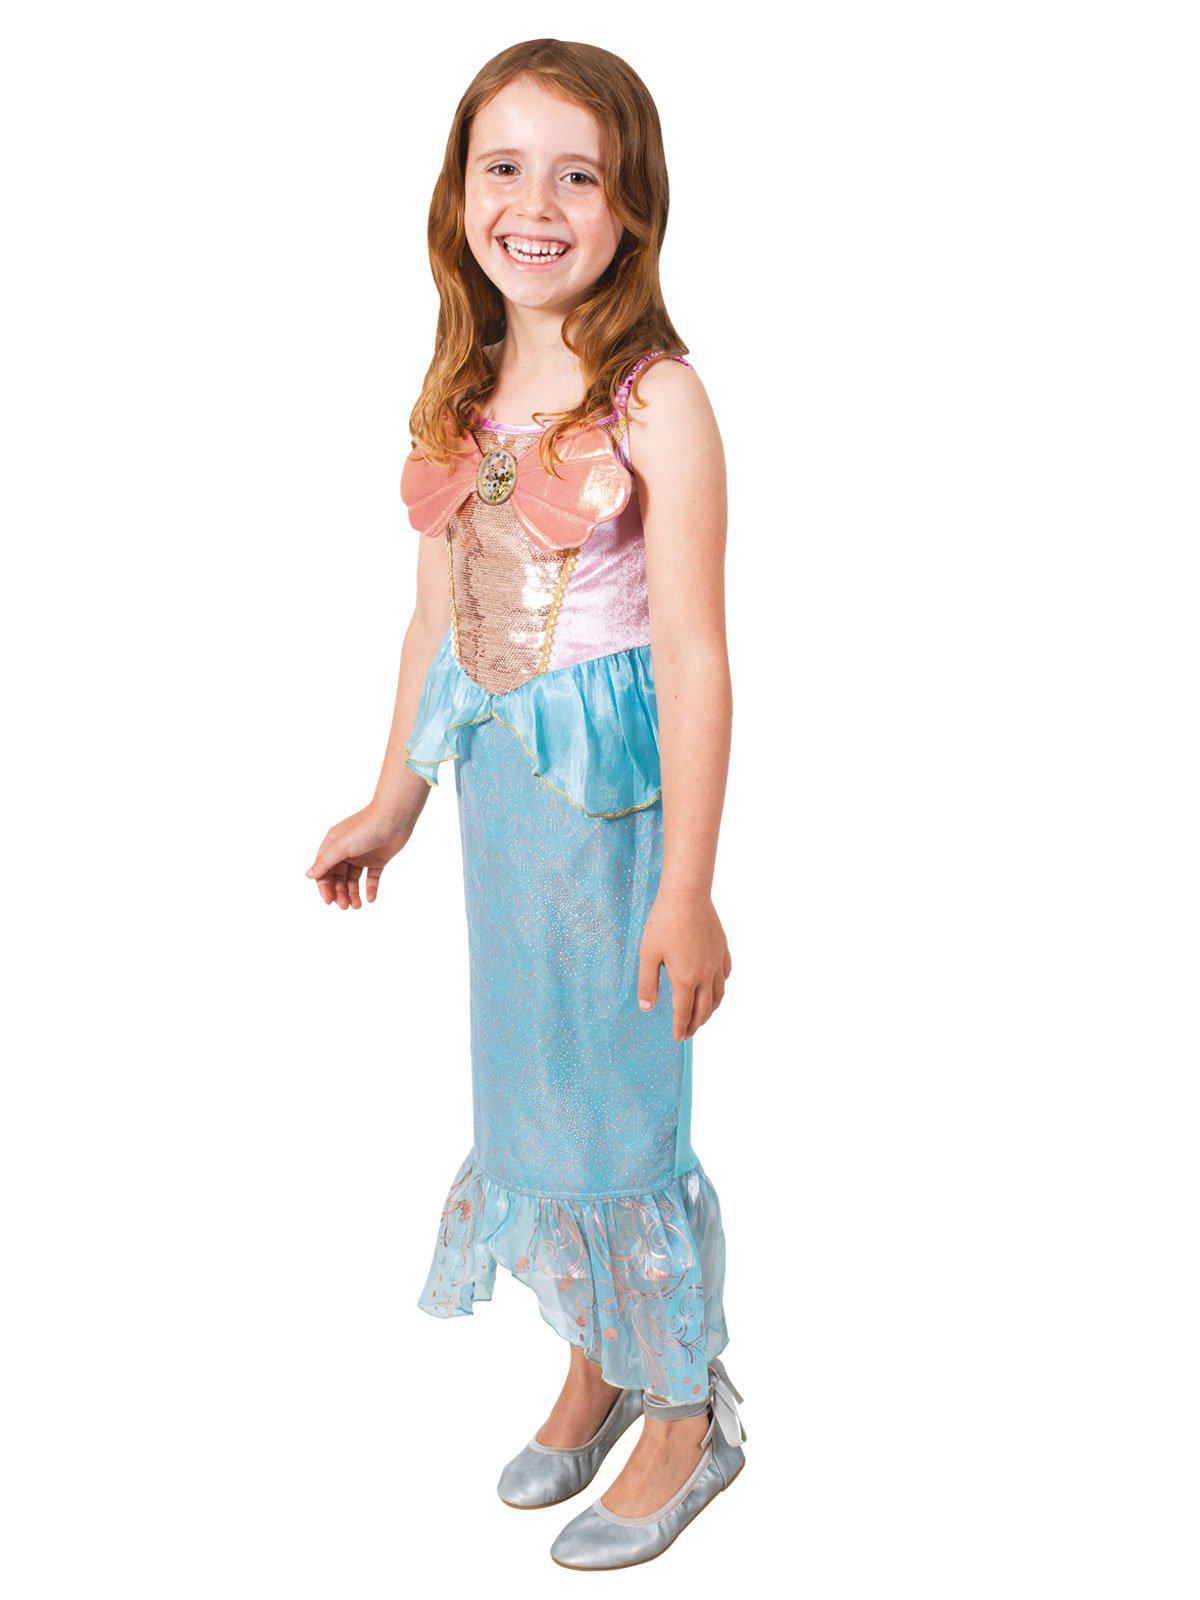 Ariel Ultimate Princess Celebration Costume Kids